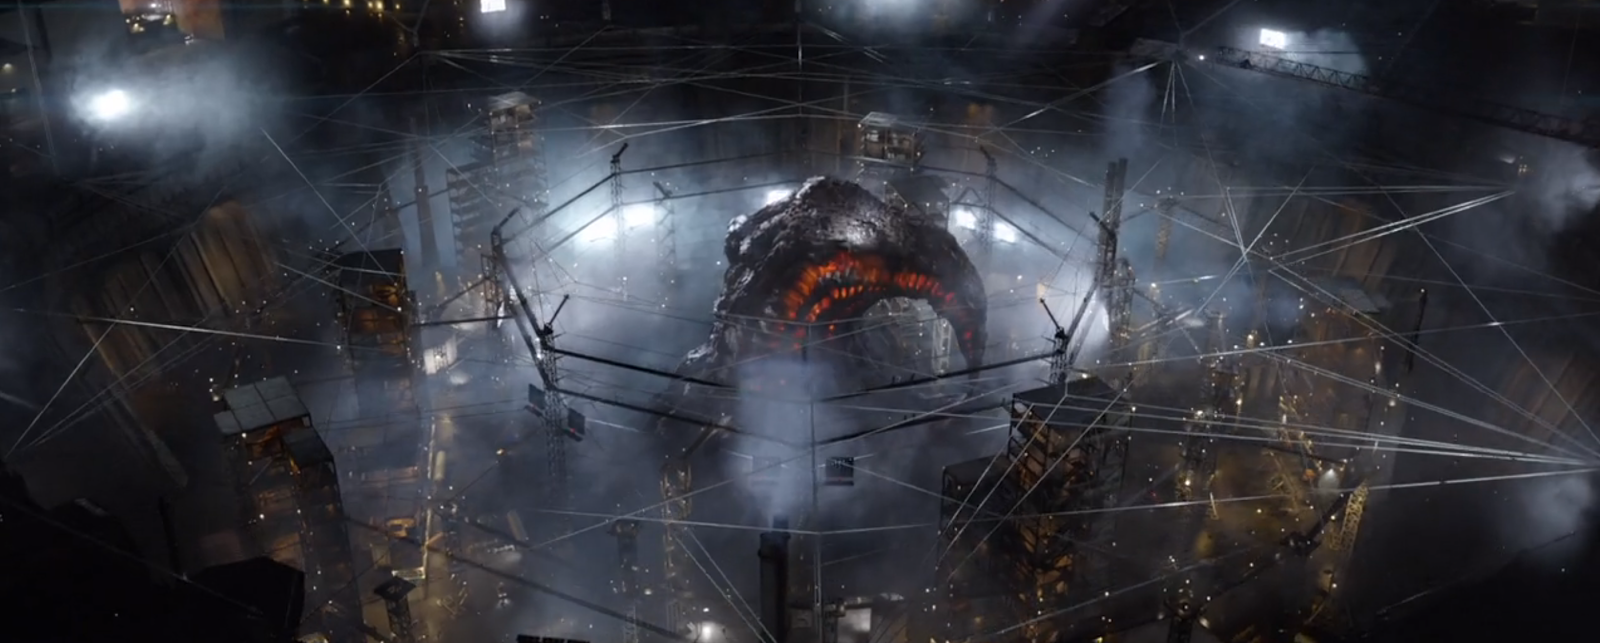 Video Godzilla 2014 New Movie Gambar Godzilla vs Muto 